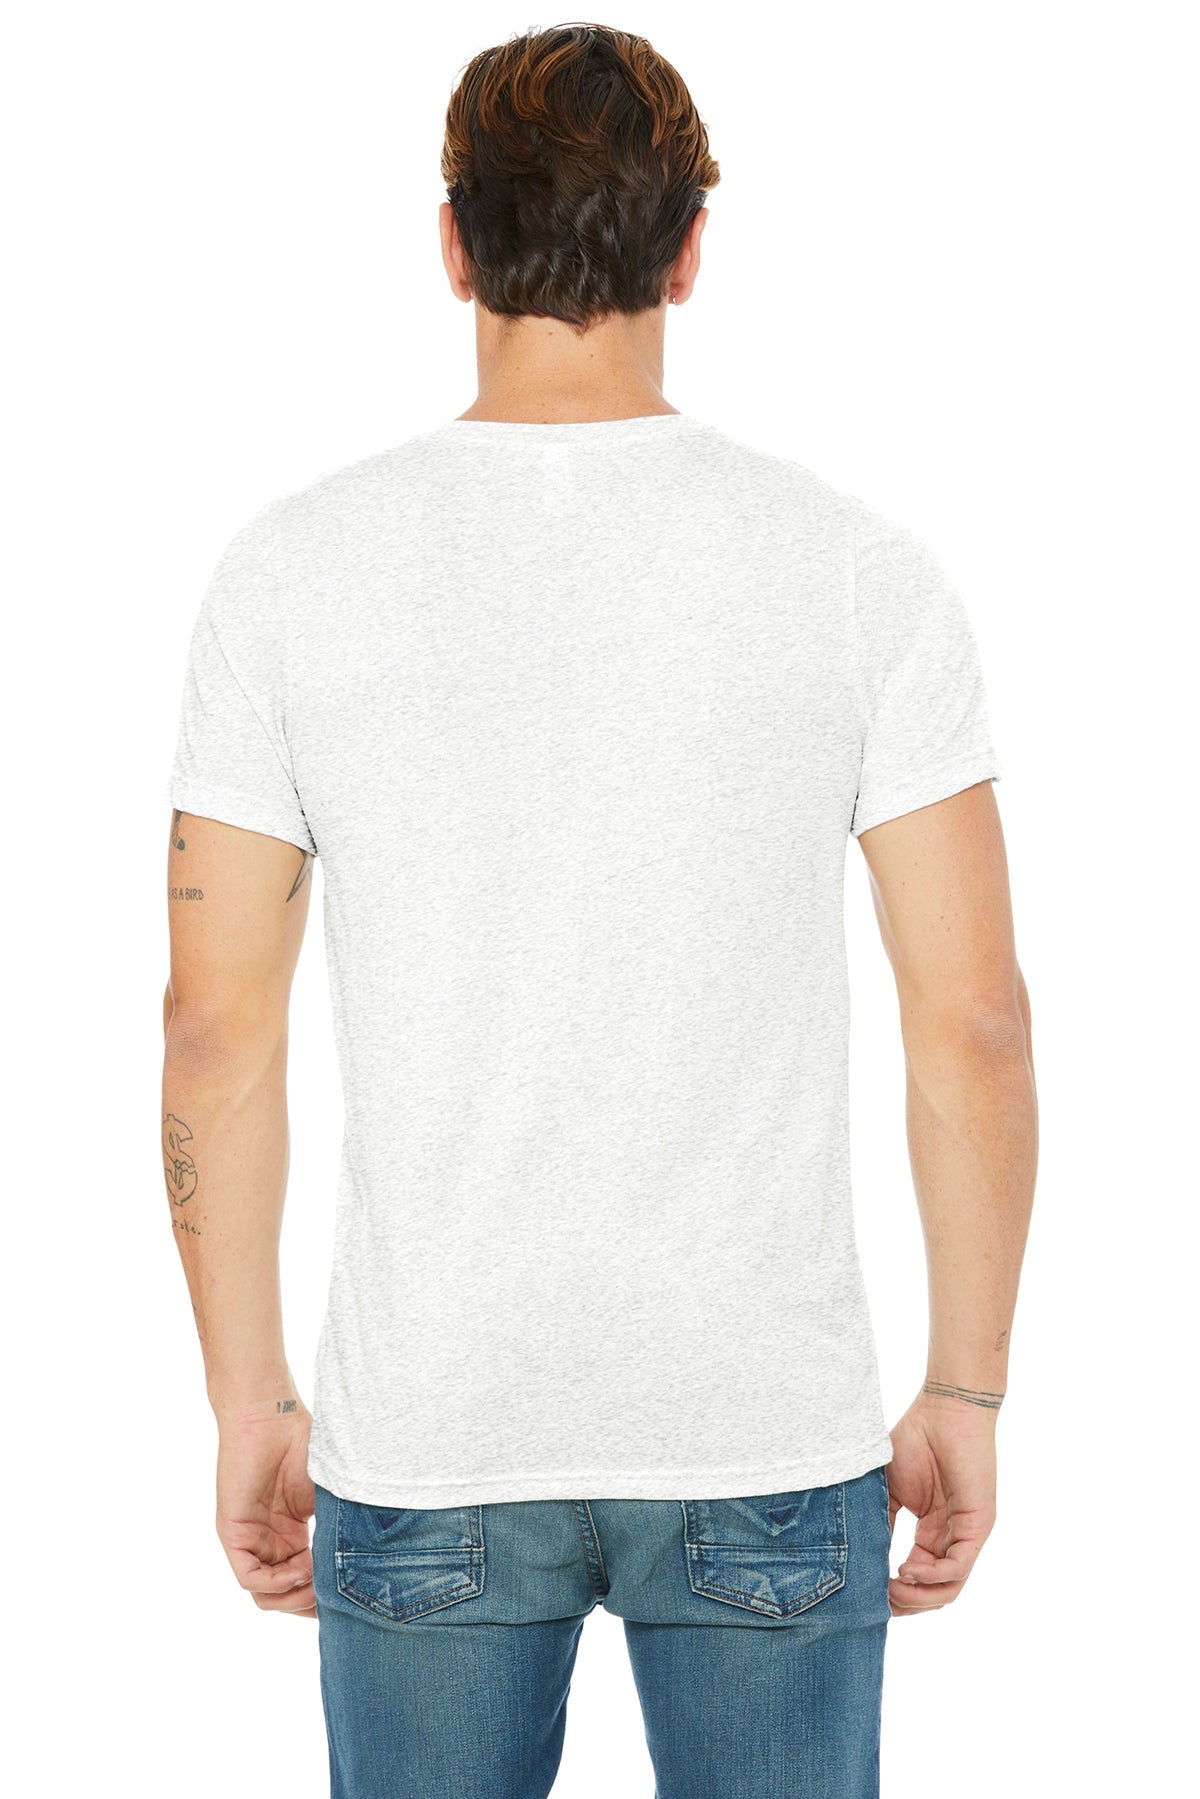 bella + canvas unisex triblend short sleeve v-neck t-shirt 3415c wht flck triblnd